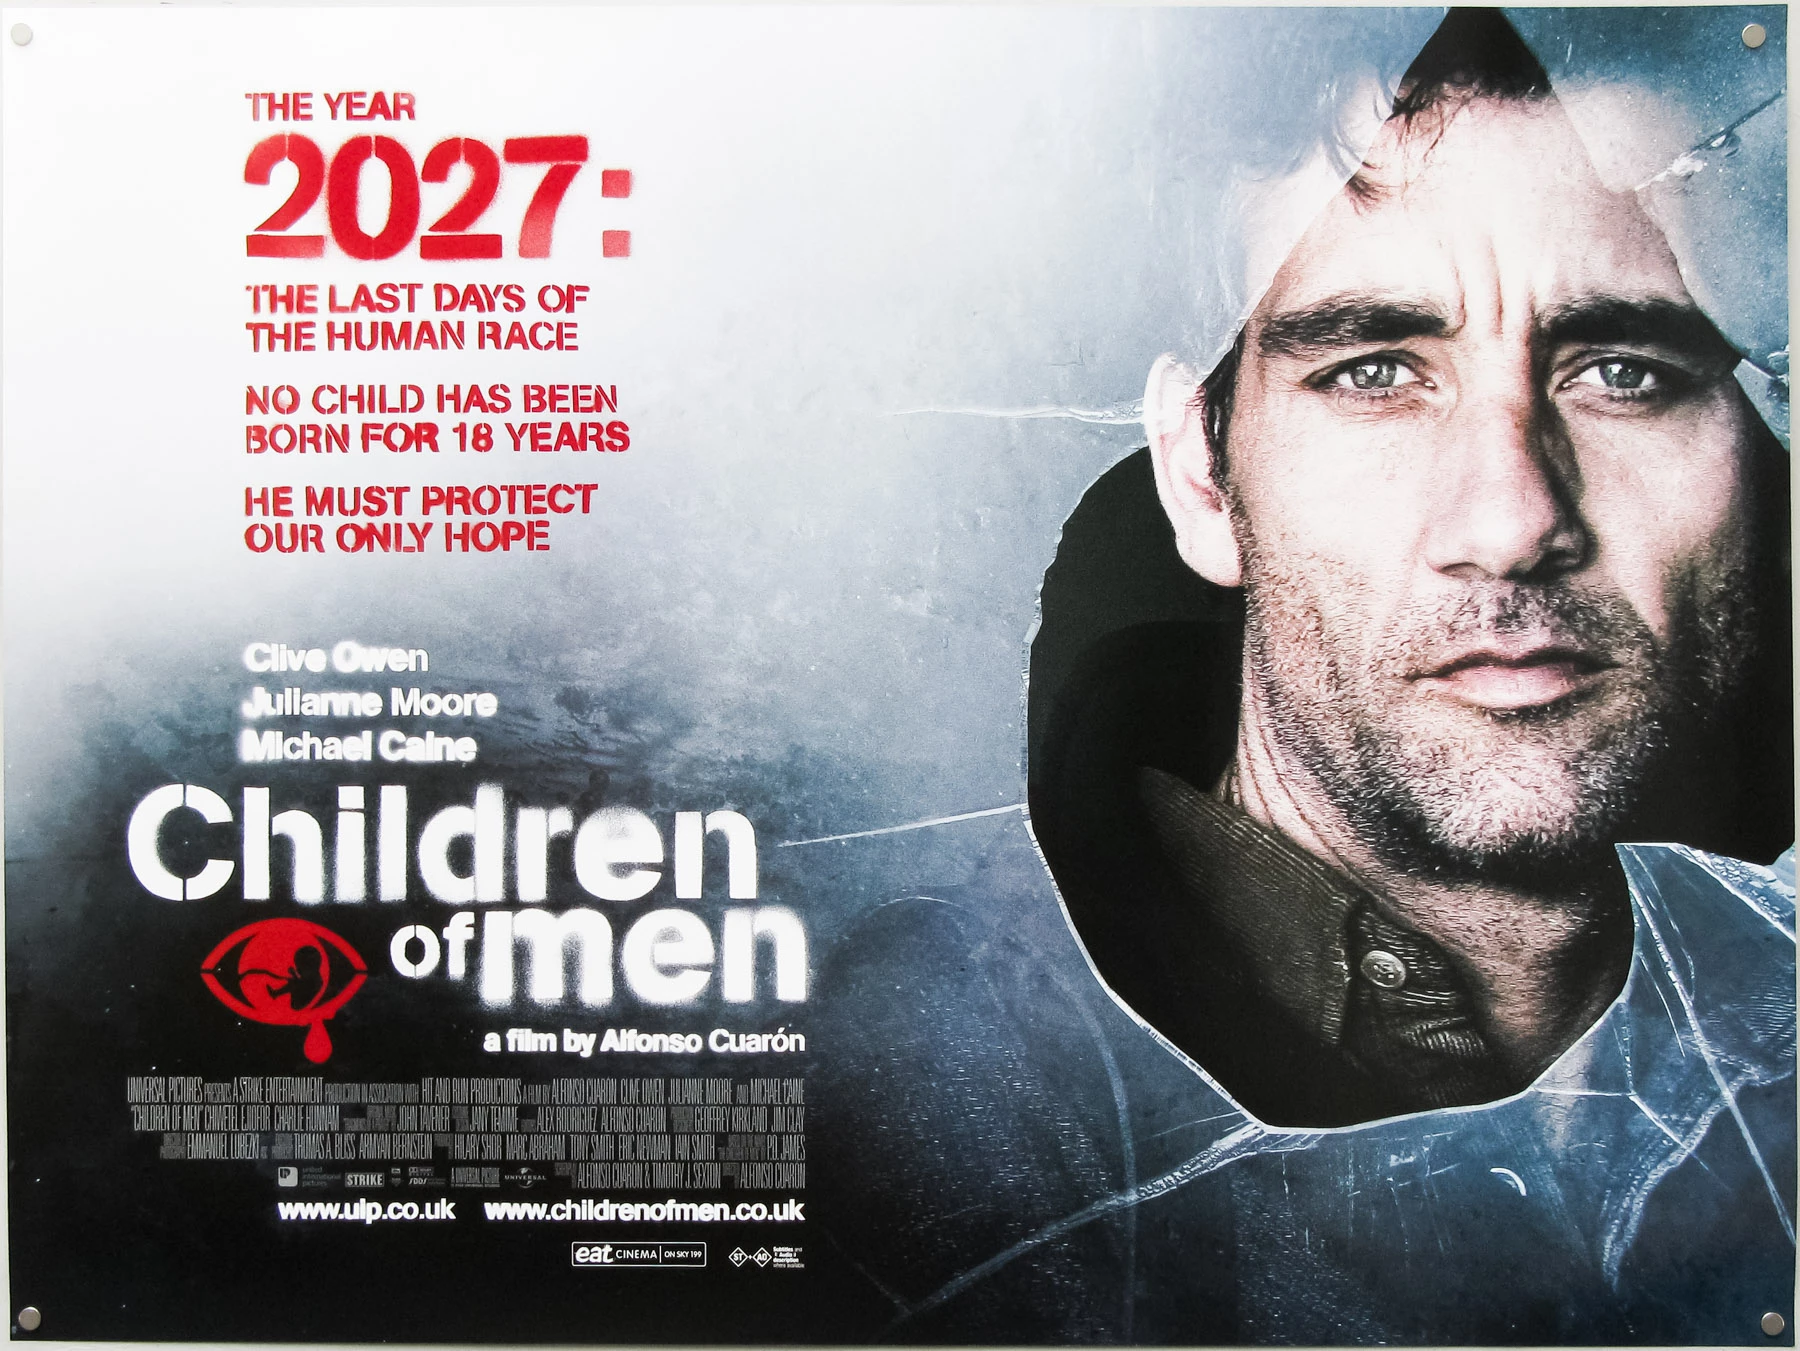 Children of Men (2006) - movies like Blade Runner